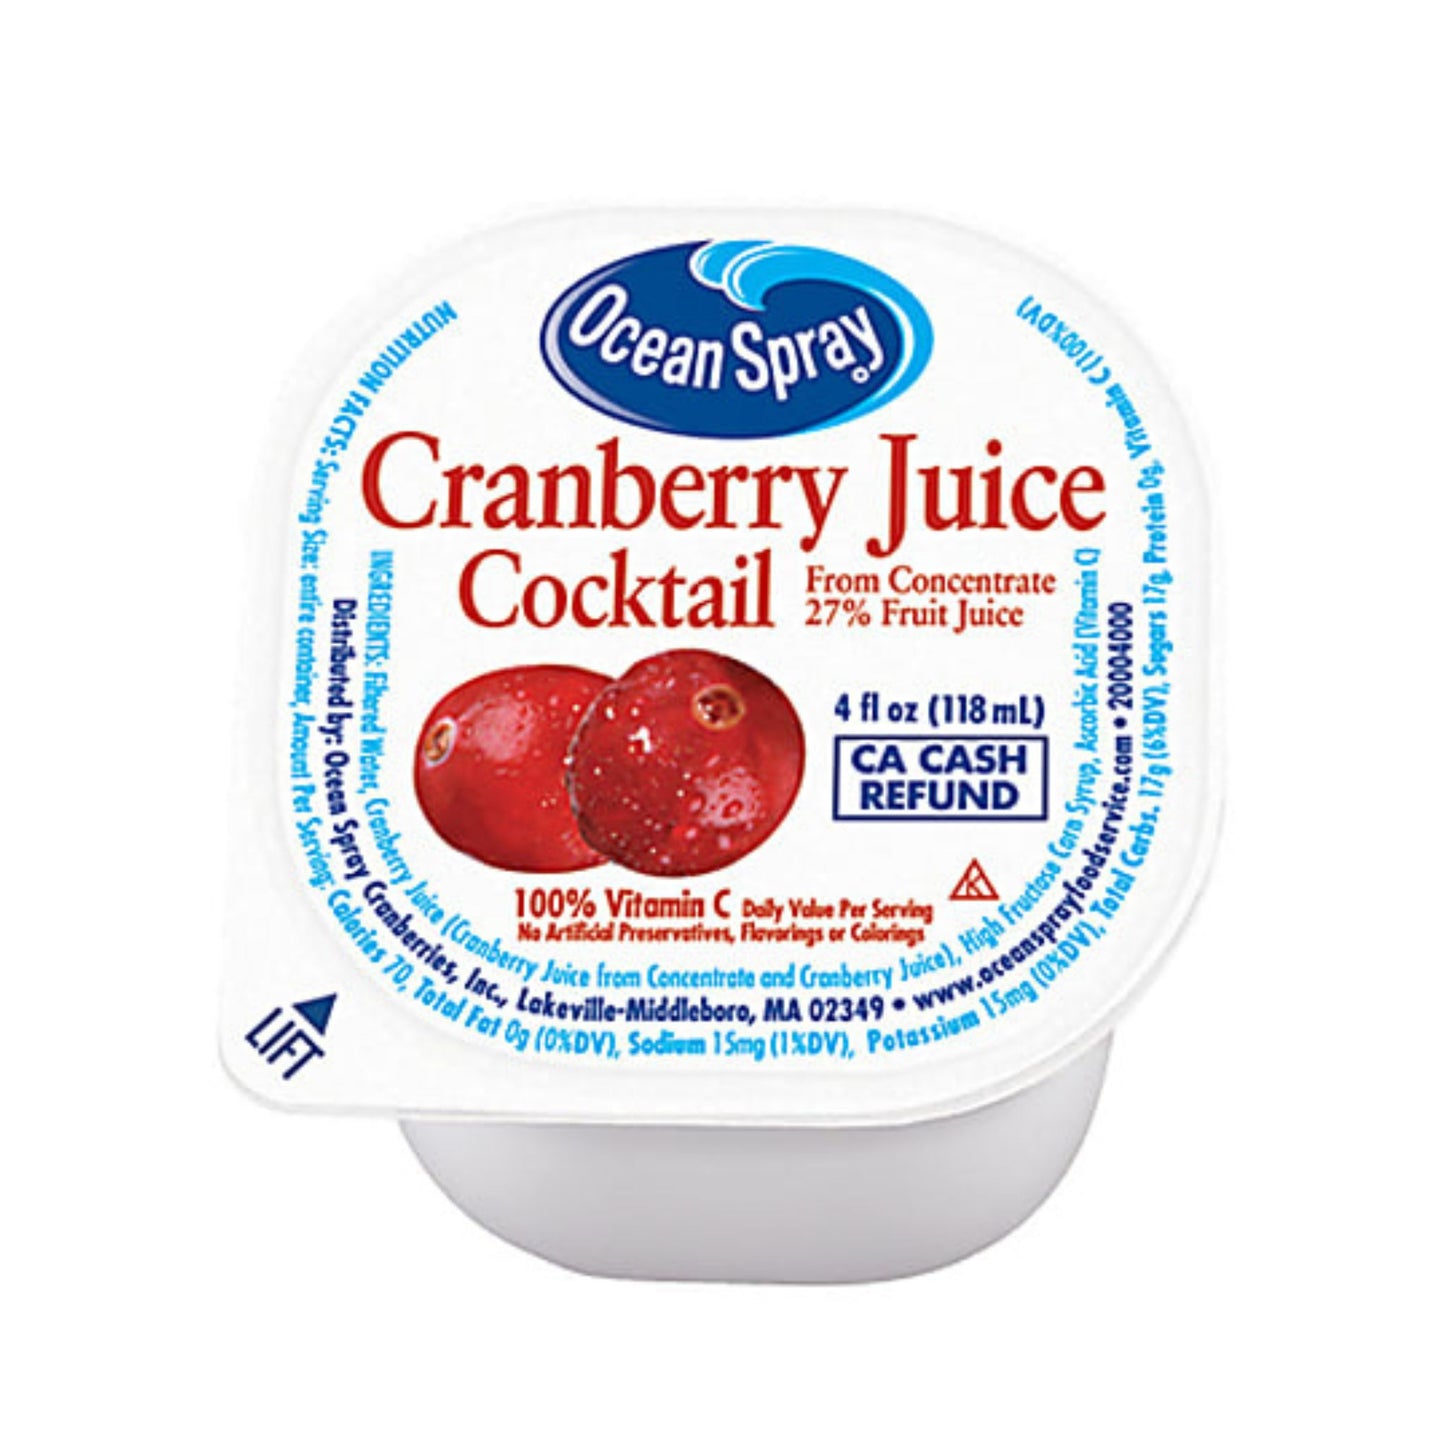 Ocean Spray Cranberry Juice 4 Oz. Pack Of 48 Cups